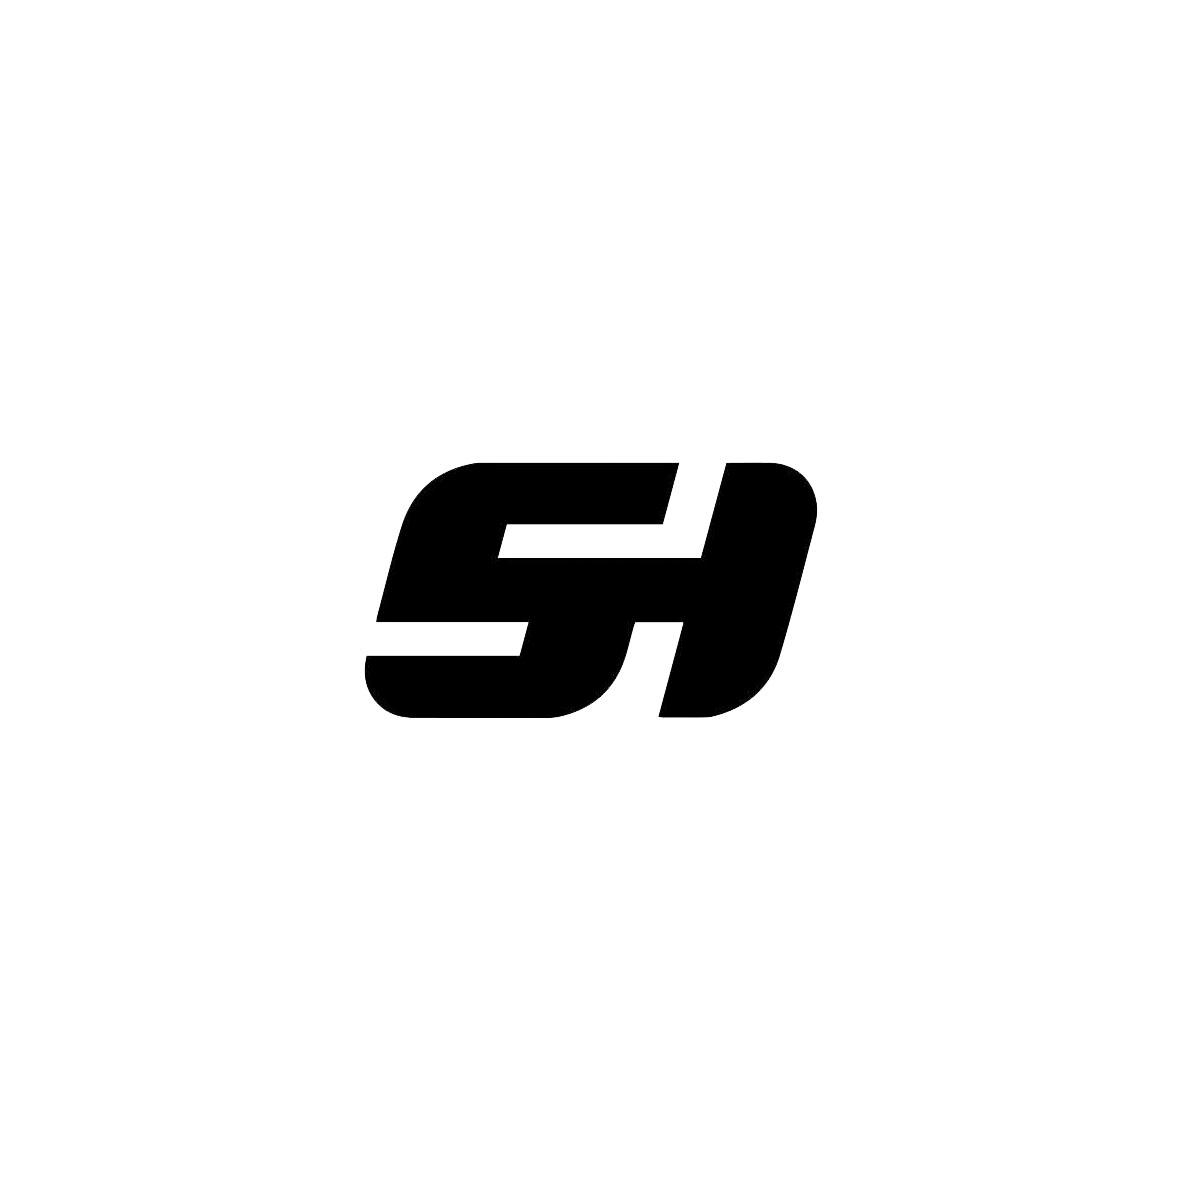 用SH做logo图片